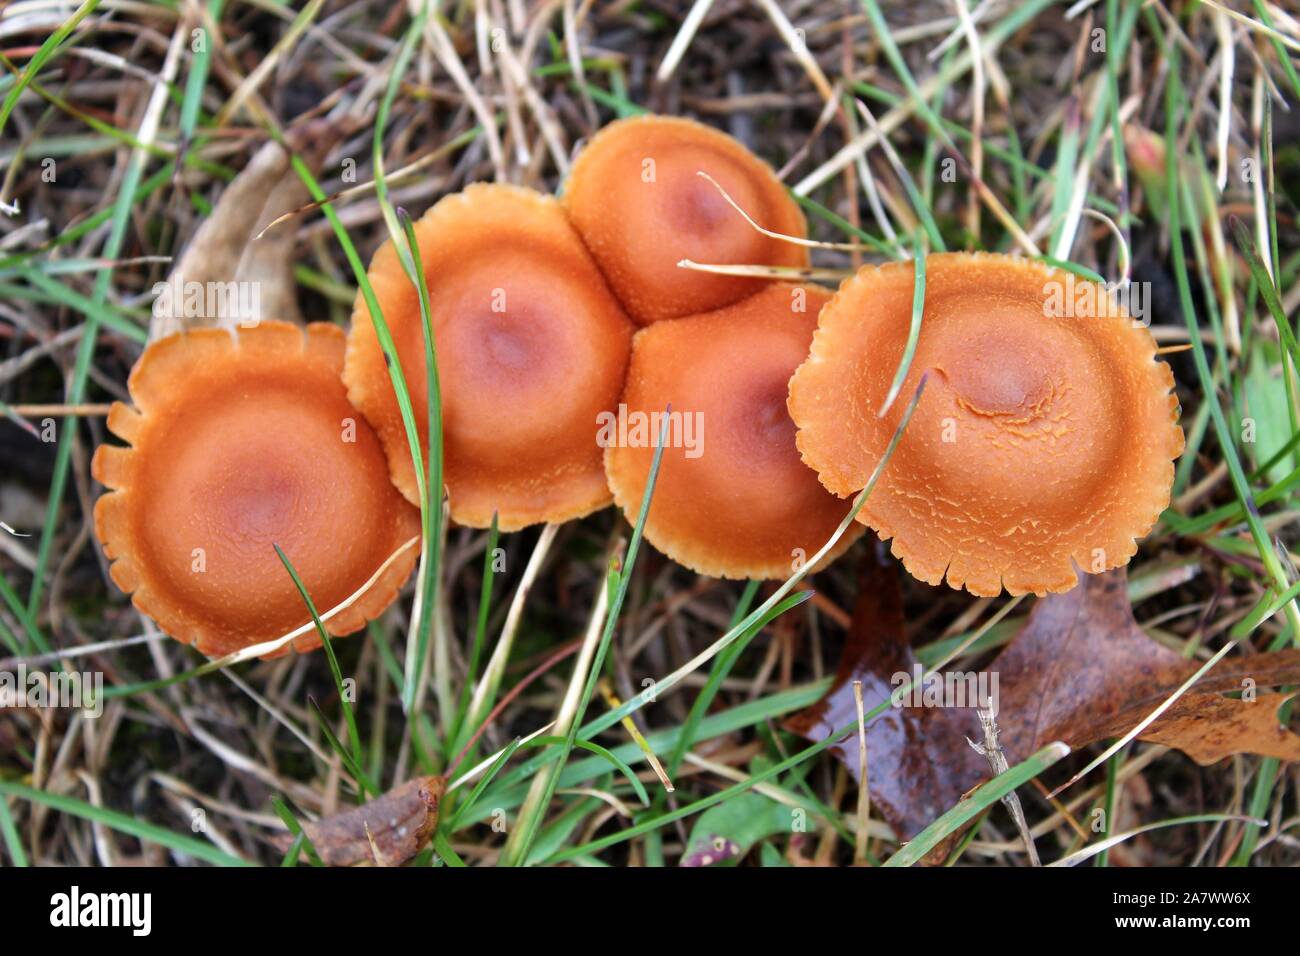 Autumn Galerina Mushrooms Pop Up In The Grass Stock Photo